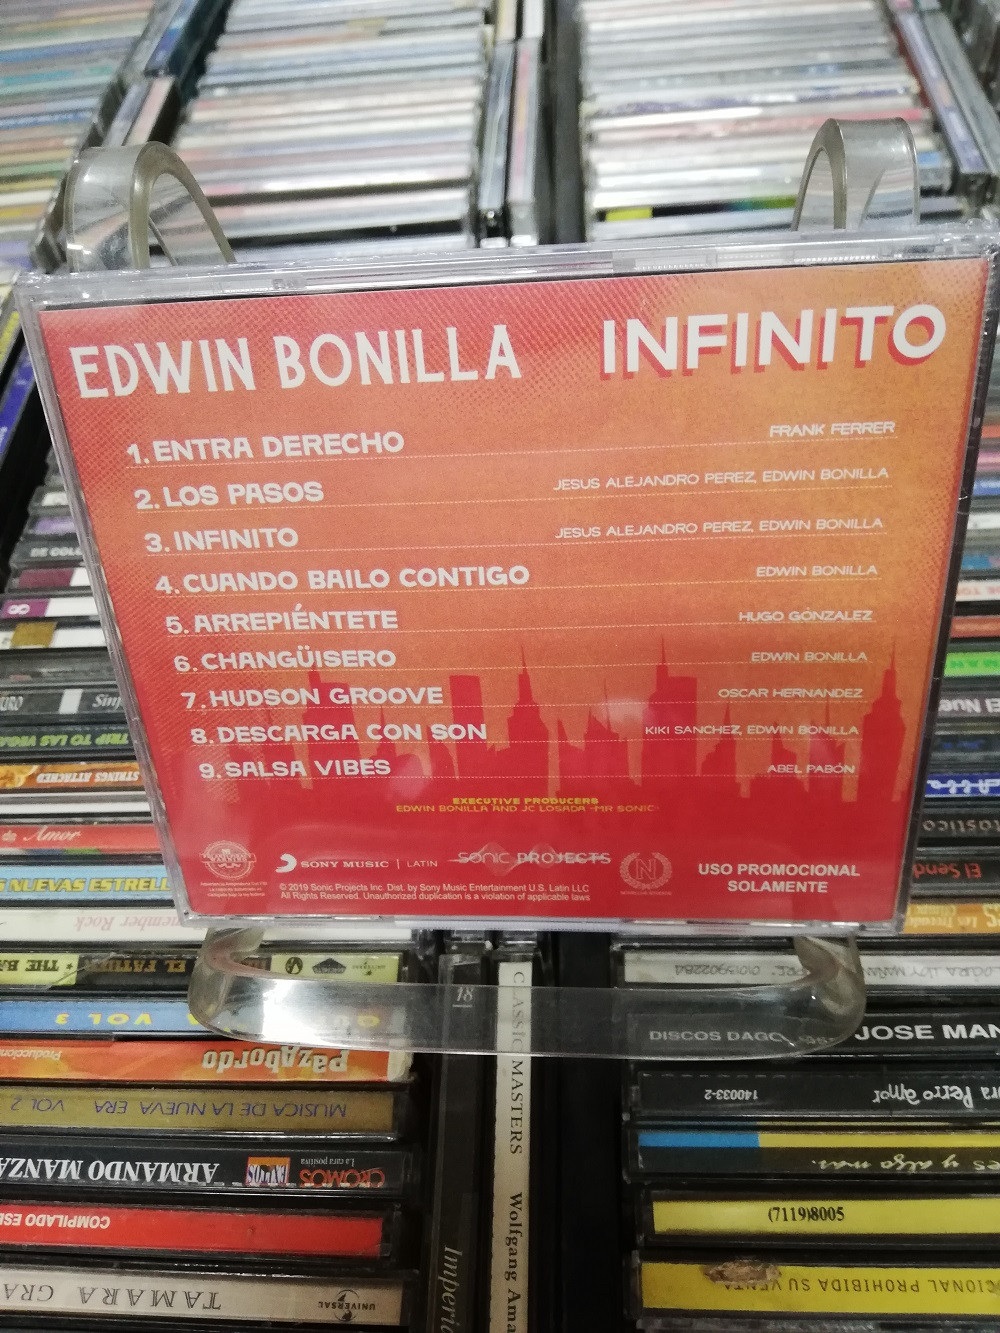 Imagen CD EDWIN BONILLA - INFINITO 2